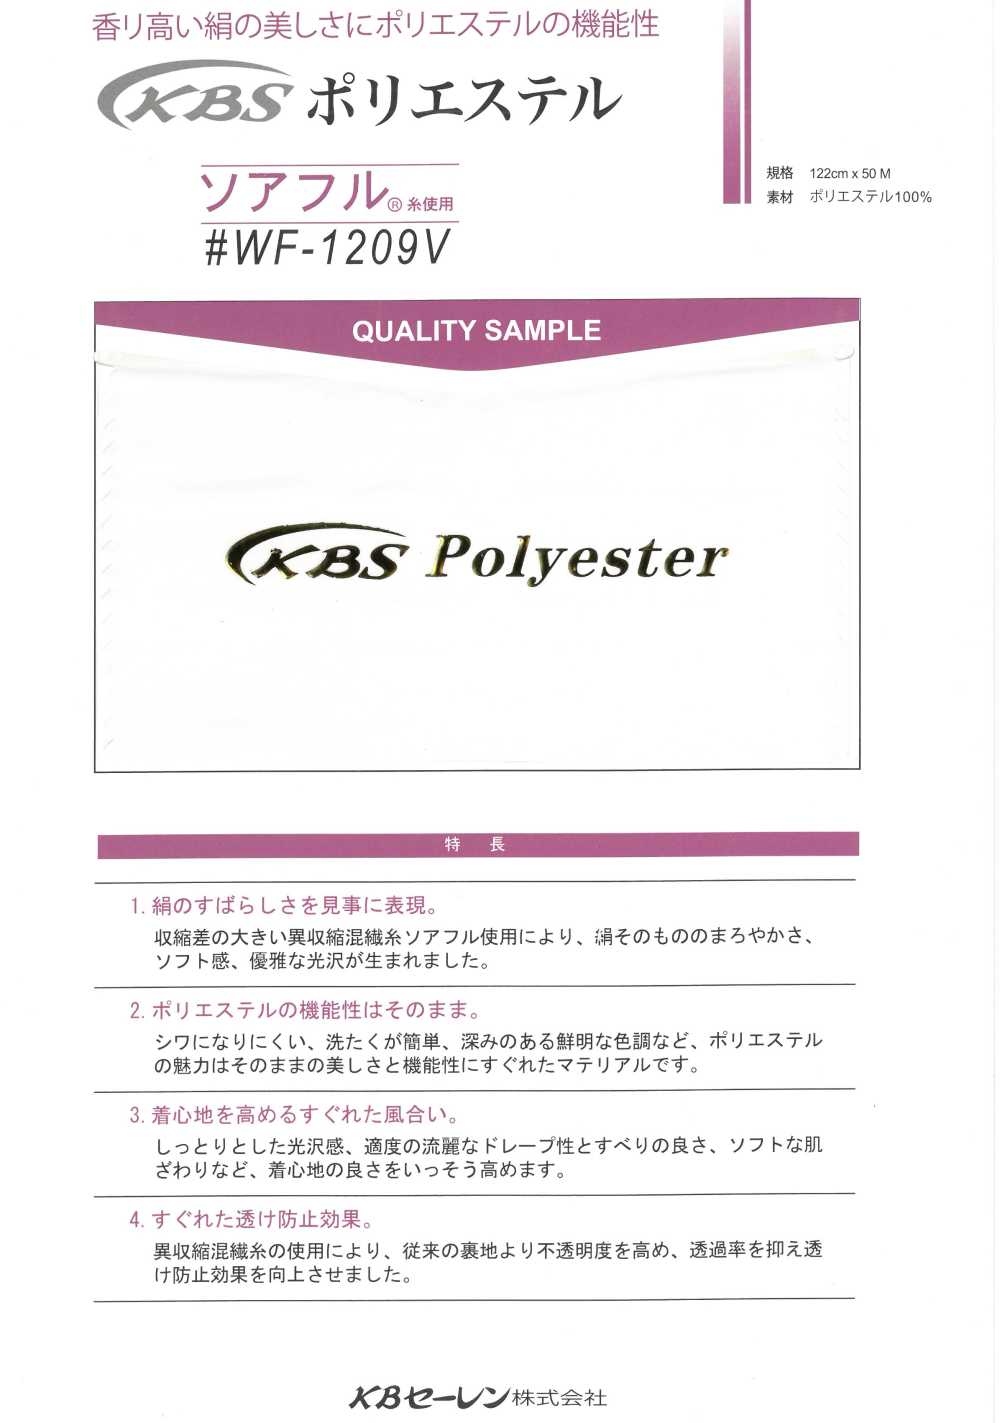 WF1209V Vải Lót Polyester Soarful®